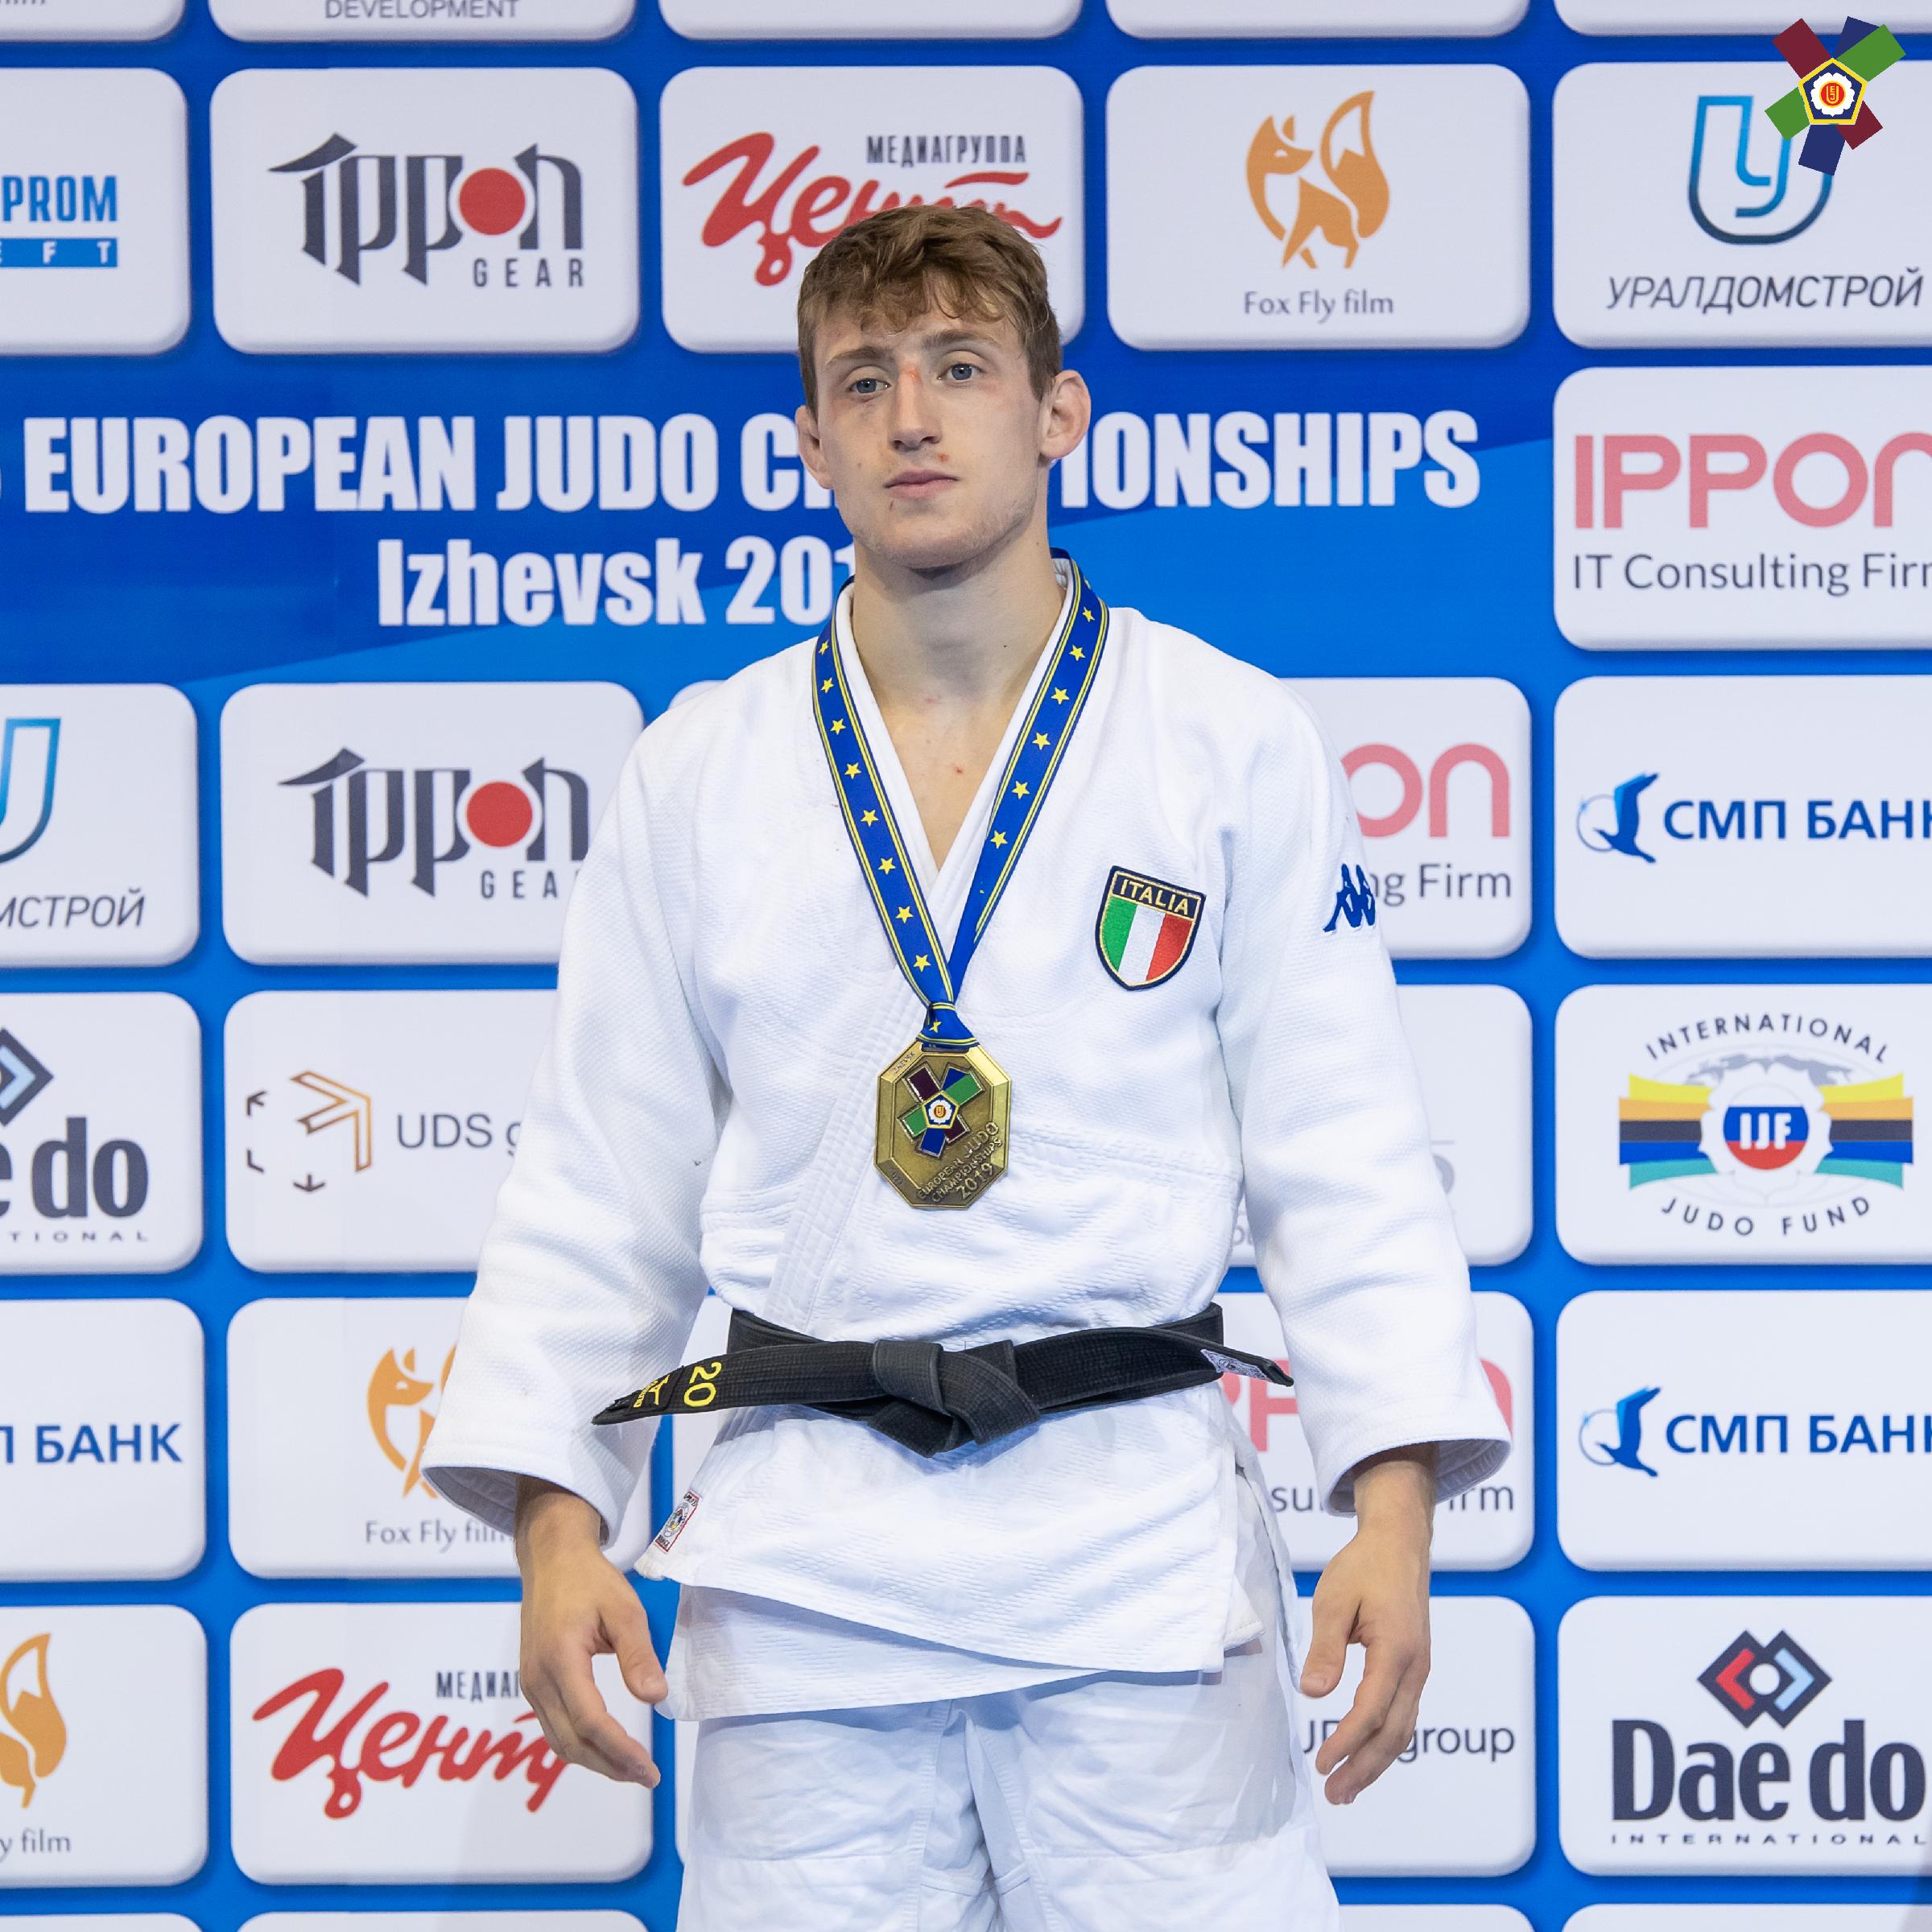 EJU U23 European Judo Championships Izhevsk 2019 11 01 Rui Telmo Romão 382103